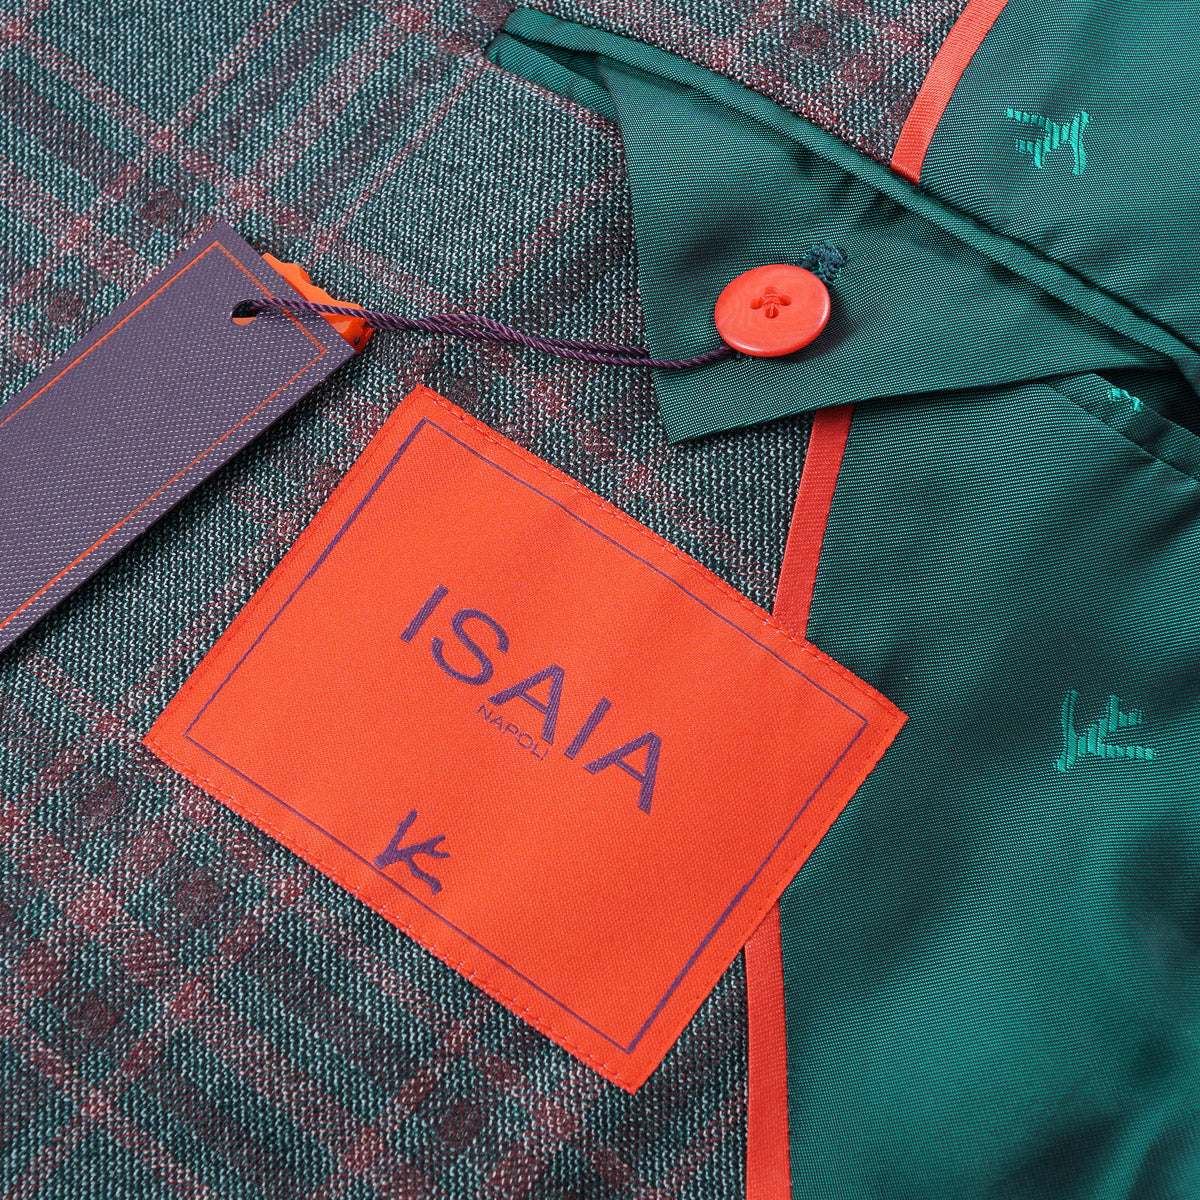 Isaia 'Sanita' Top Cashmere Sport Coat - Top Shelf Apparel